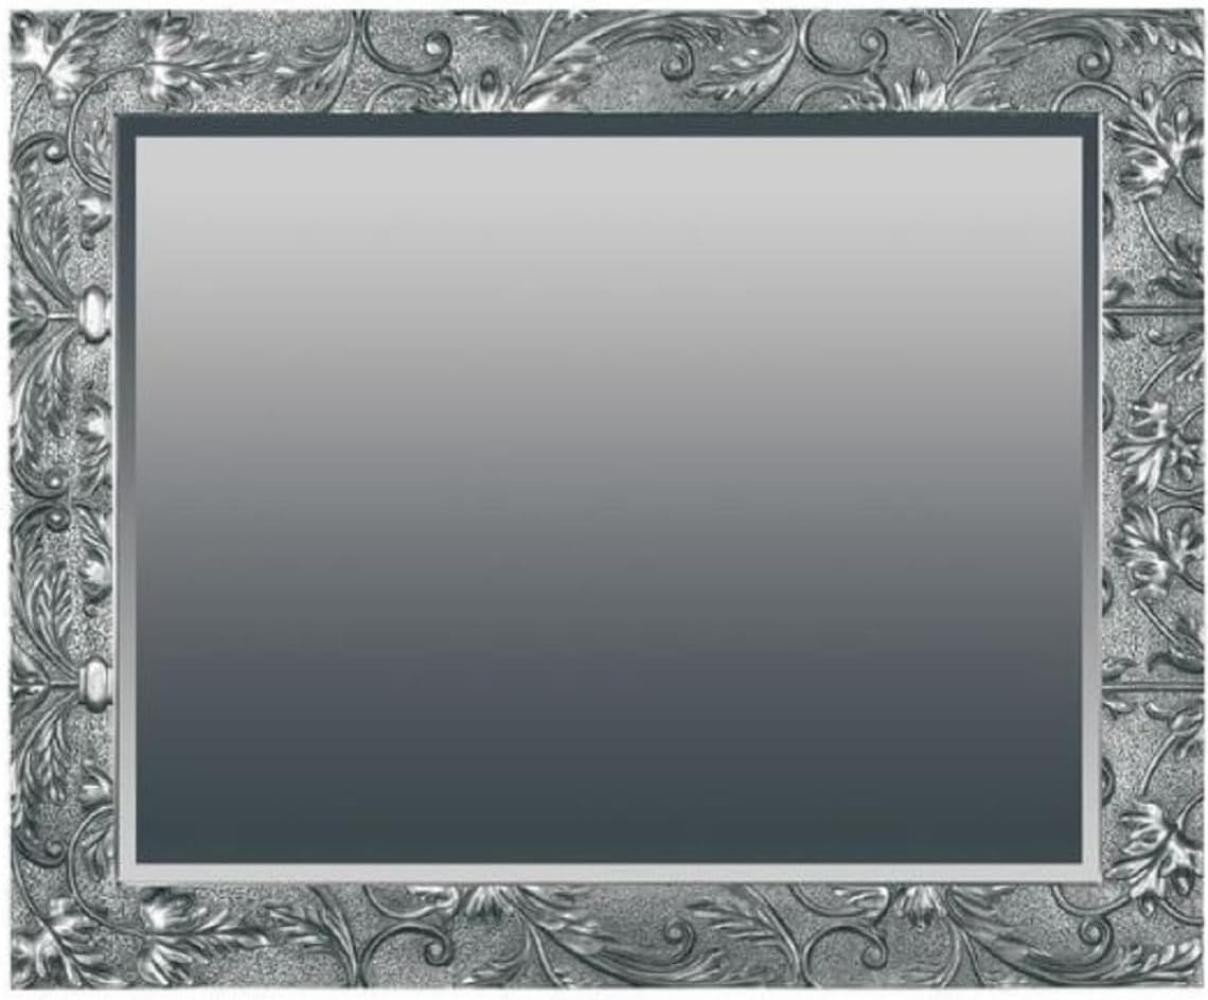 Casa Padrino Barock Spiegel Silber 110 x H. 90 cm - Rechteckiger Wandspiegel im Barockstil - Prunkvoller Antik Stil Garderoben Spiegel - Barock Interior - Handgefertigte Barock Möbel Bild 1